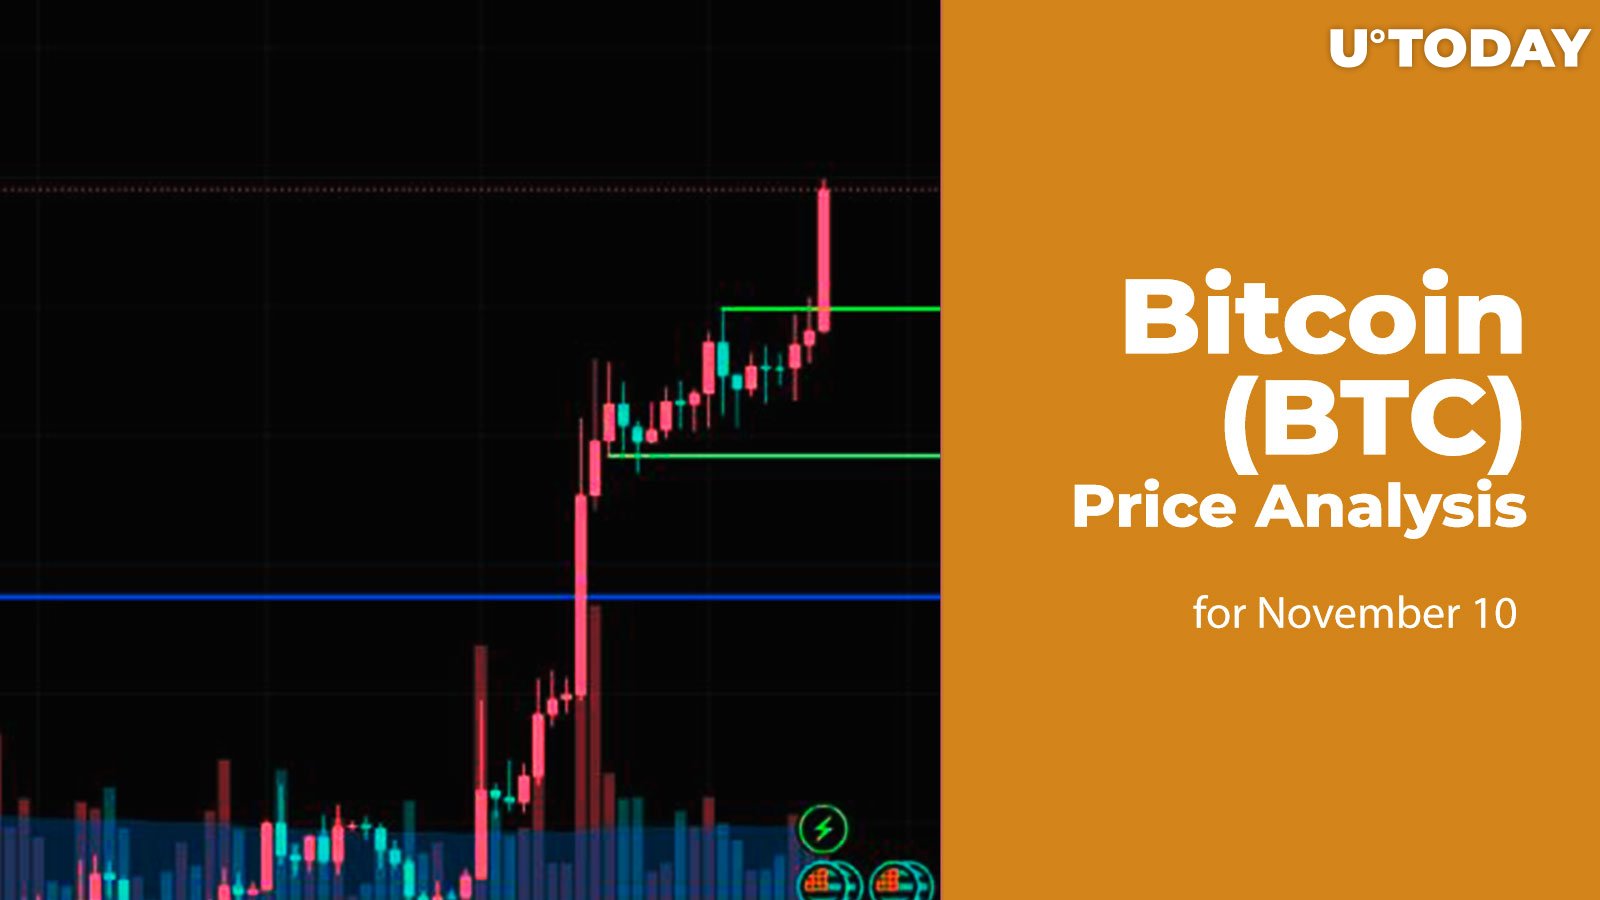 Bitcoin (BTC) Price Analysis for November 10